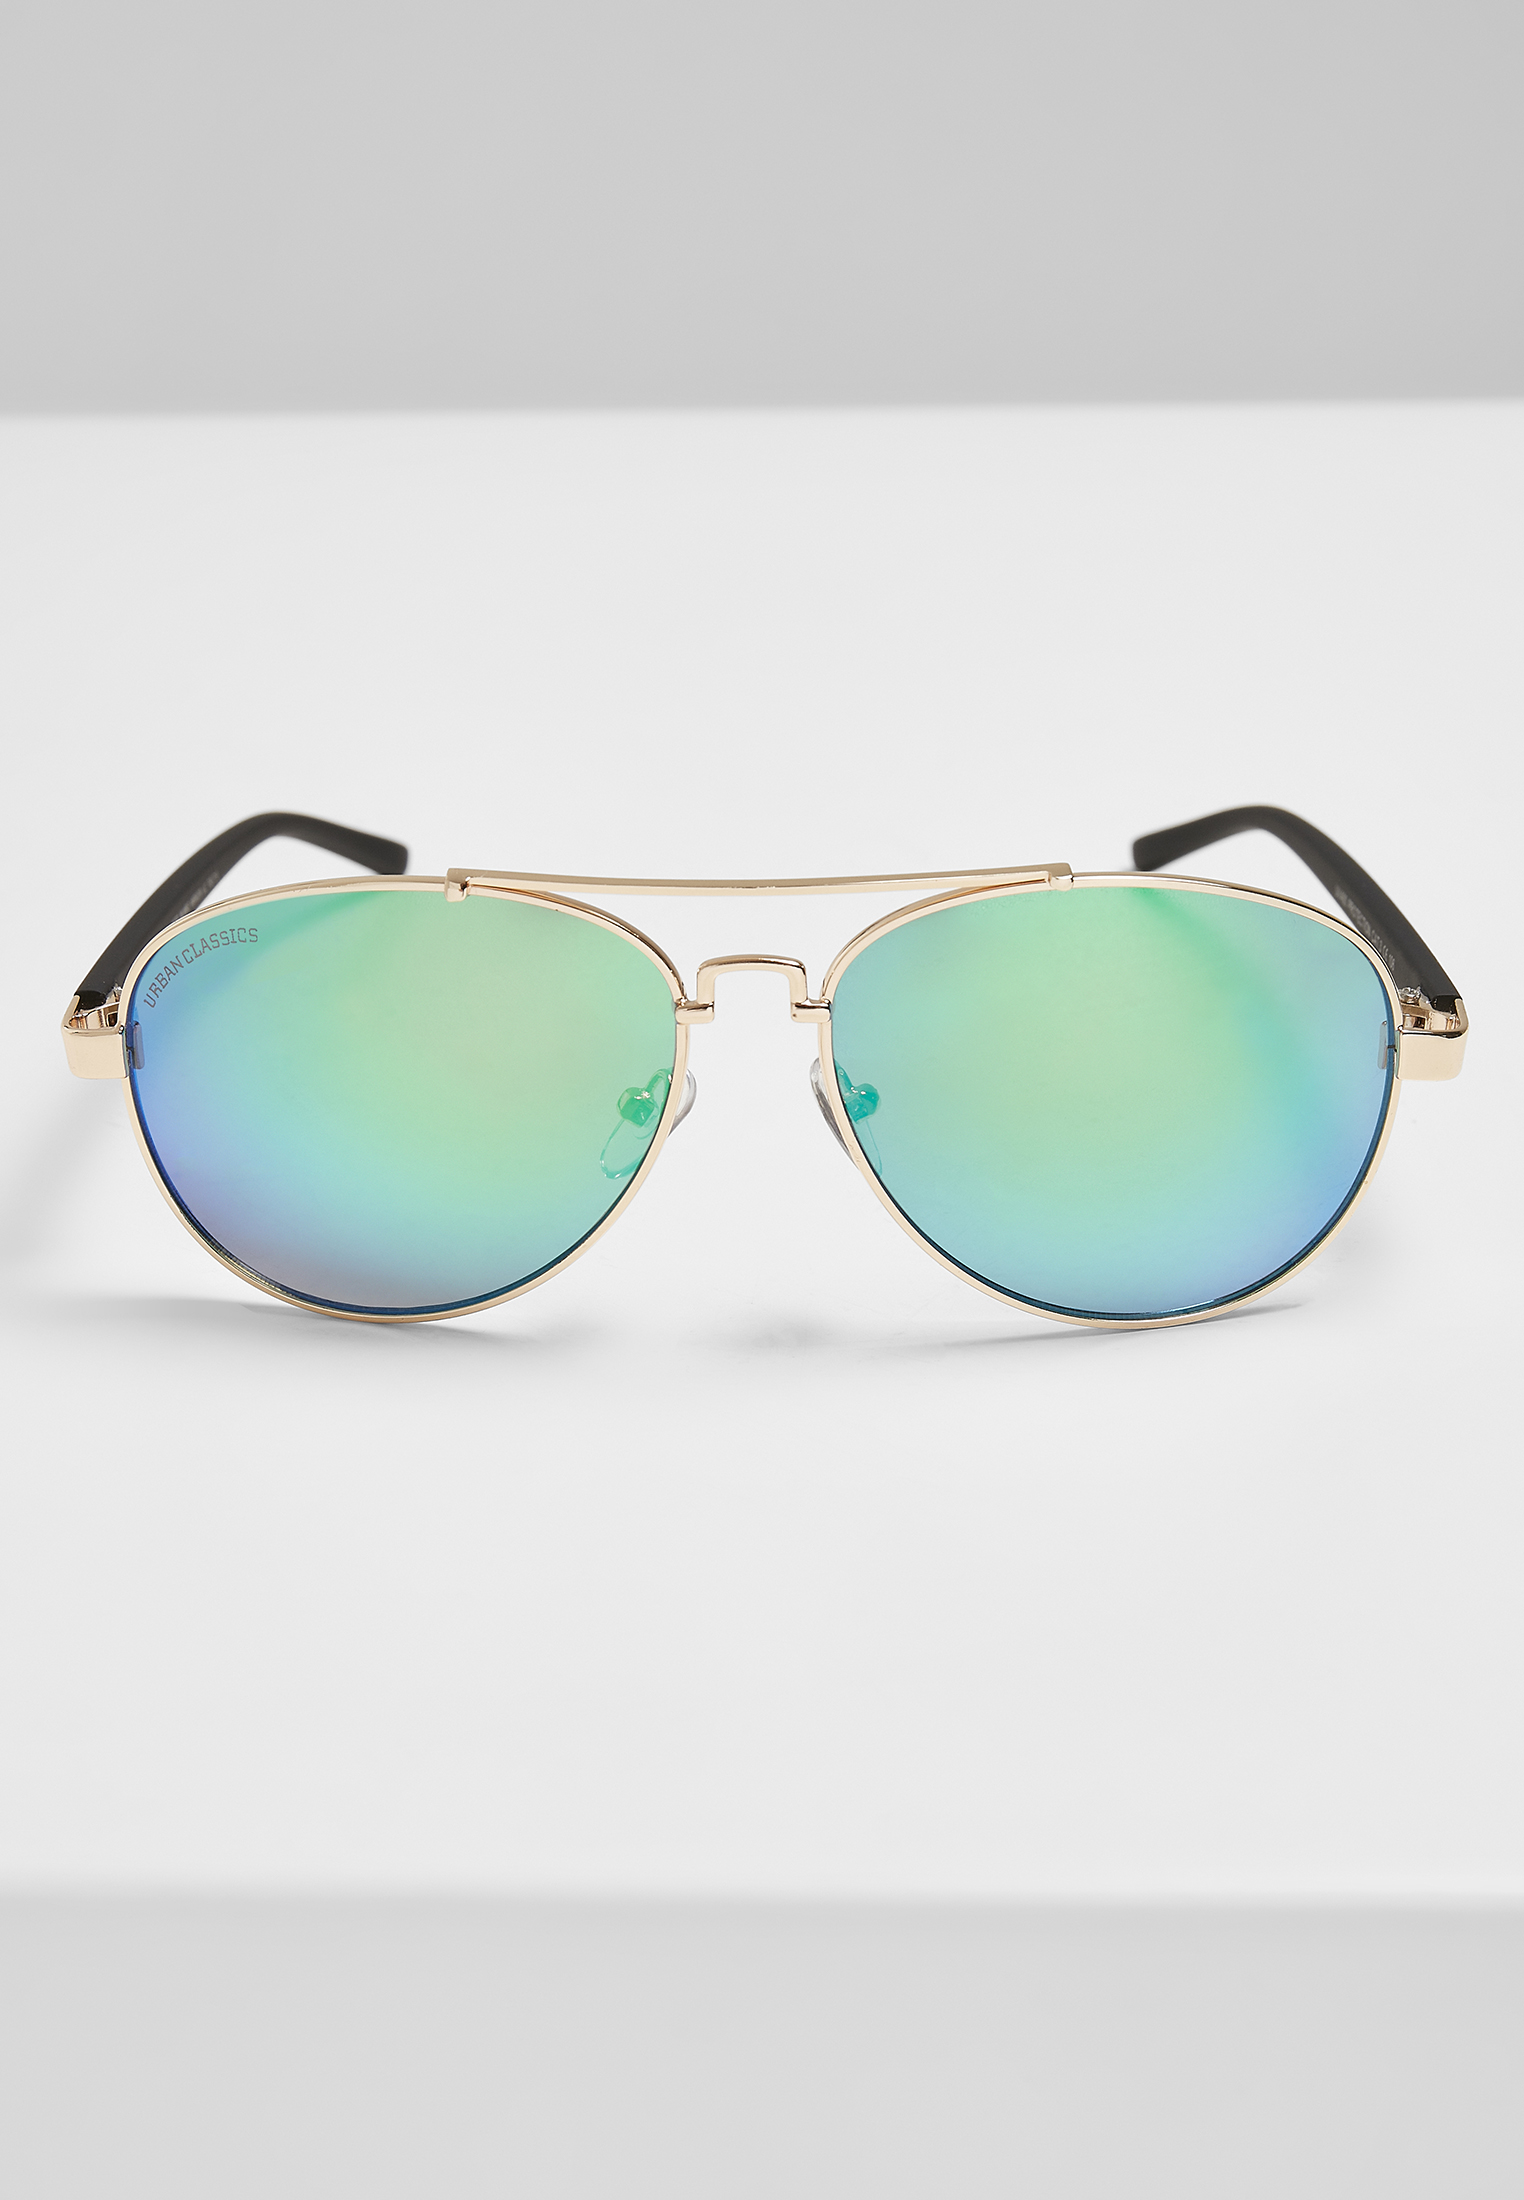 Sonnenbrillen Sunglasses Mumbo Mirror UC in Farbe gold/green